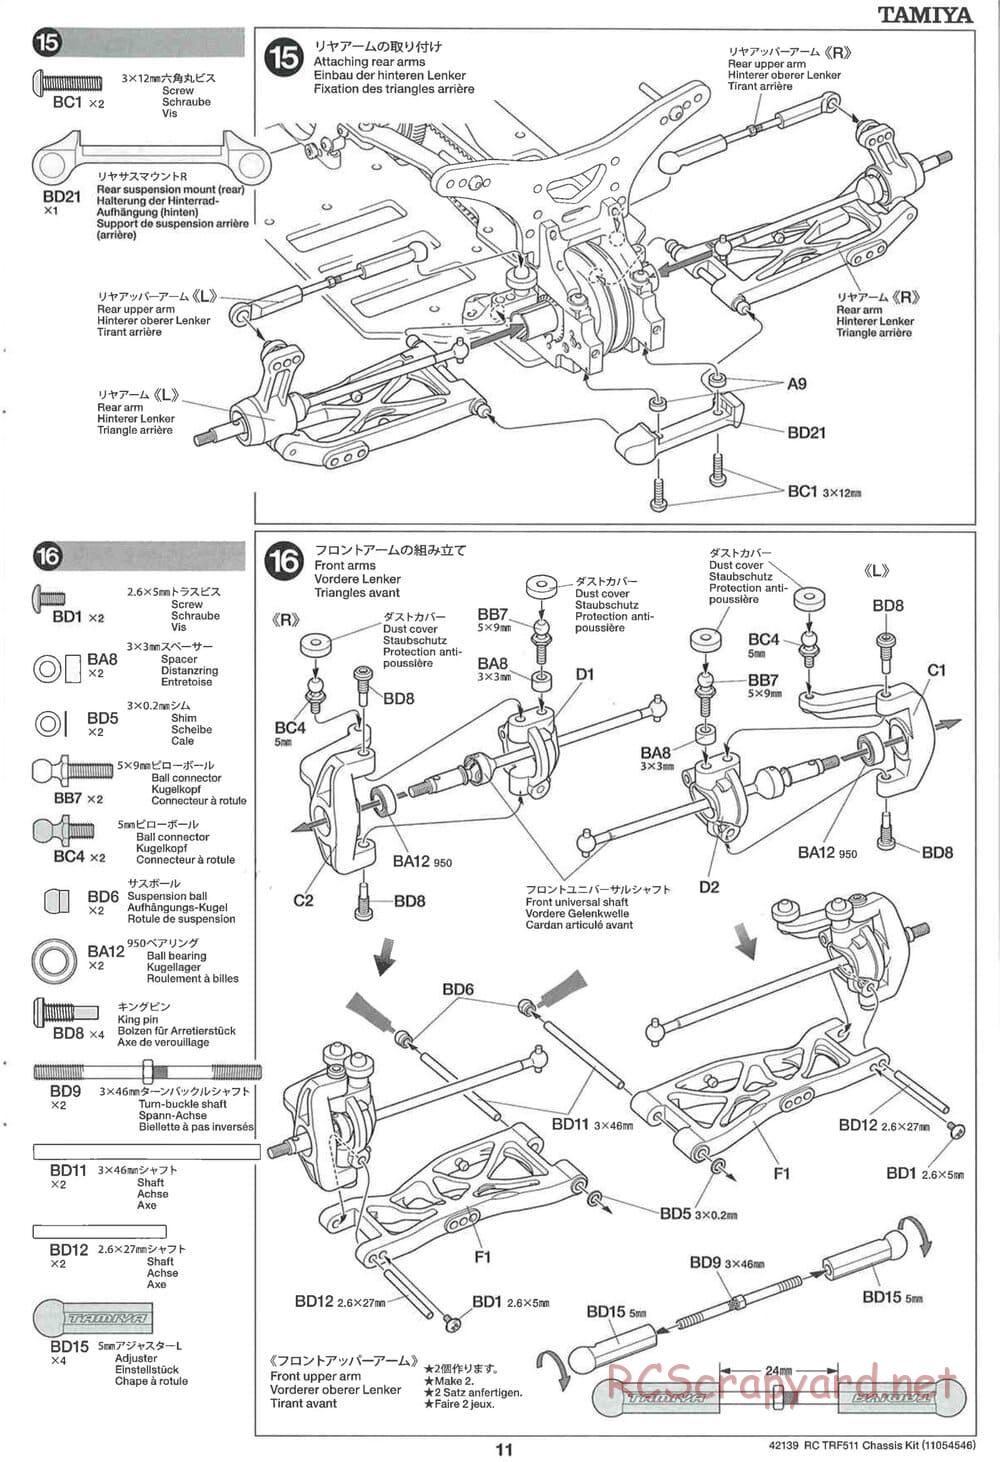 Tamiya - TRF511 Chassis - Manual - Page 11